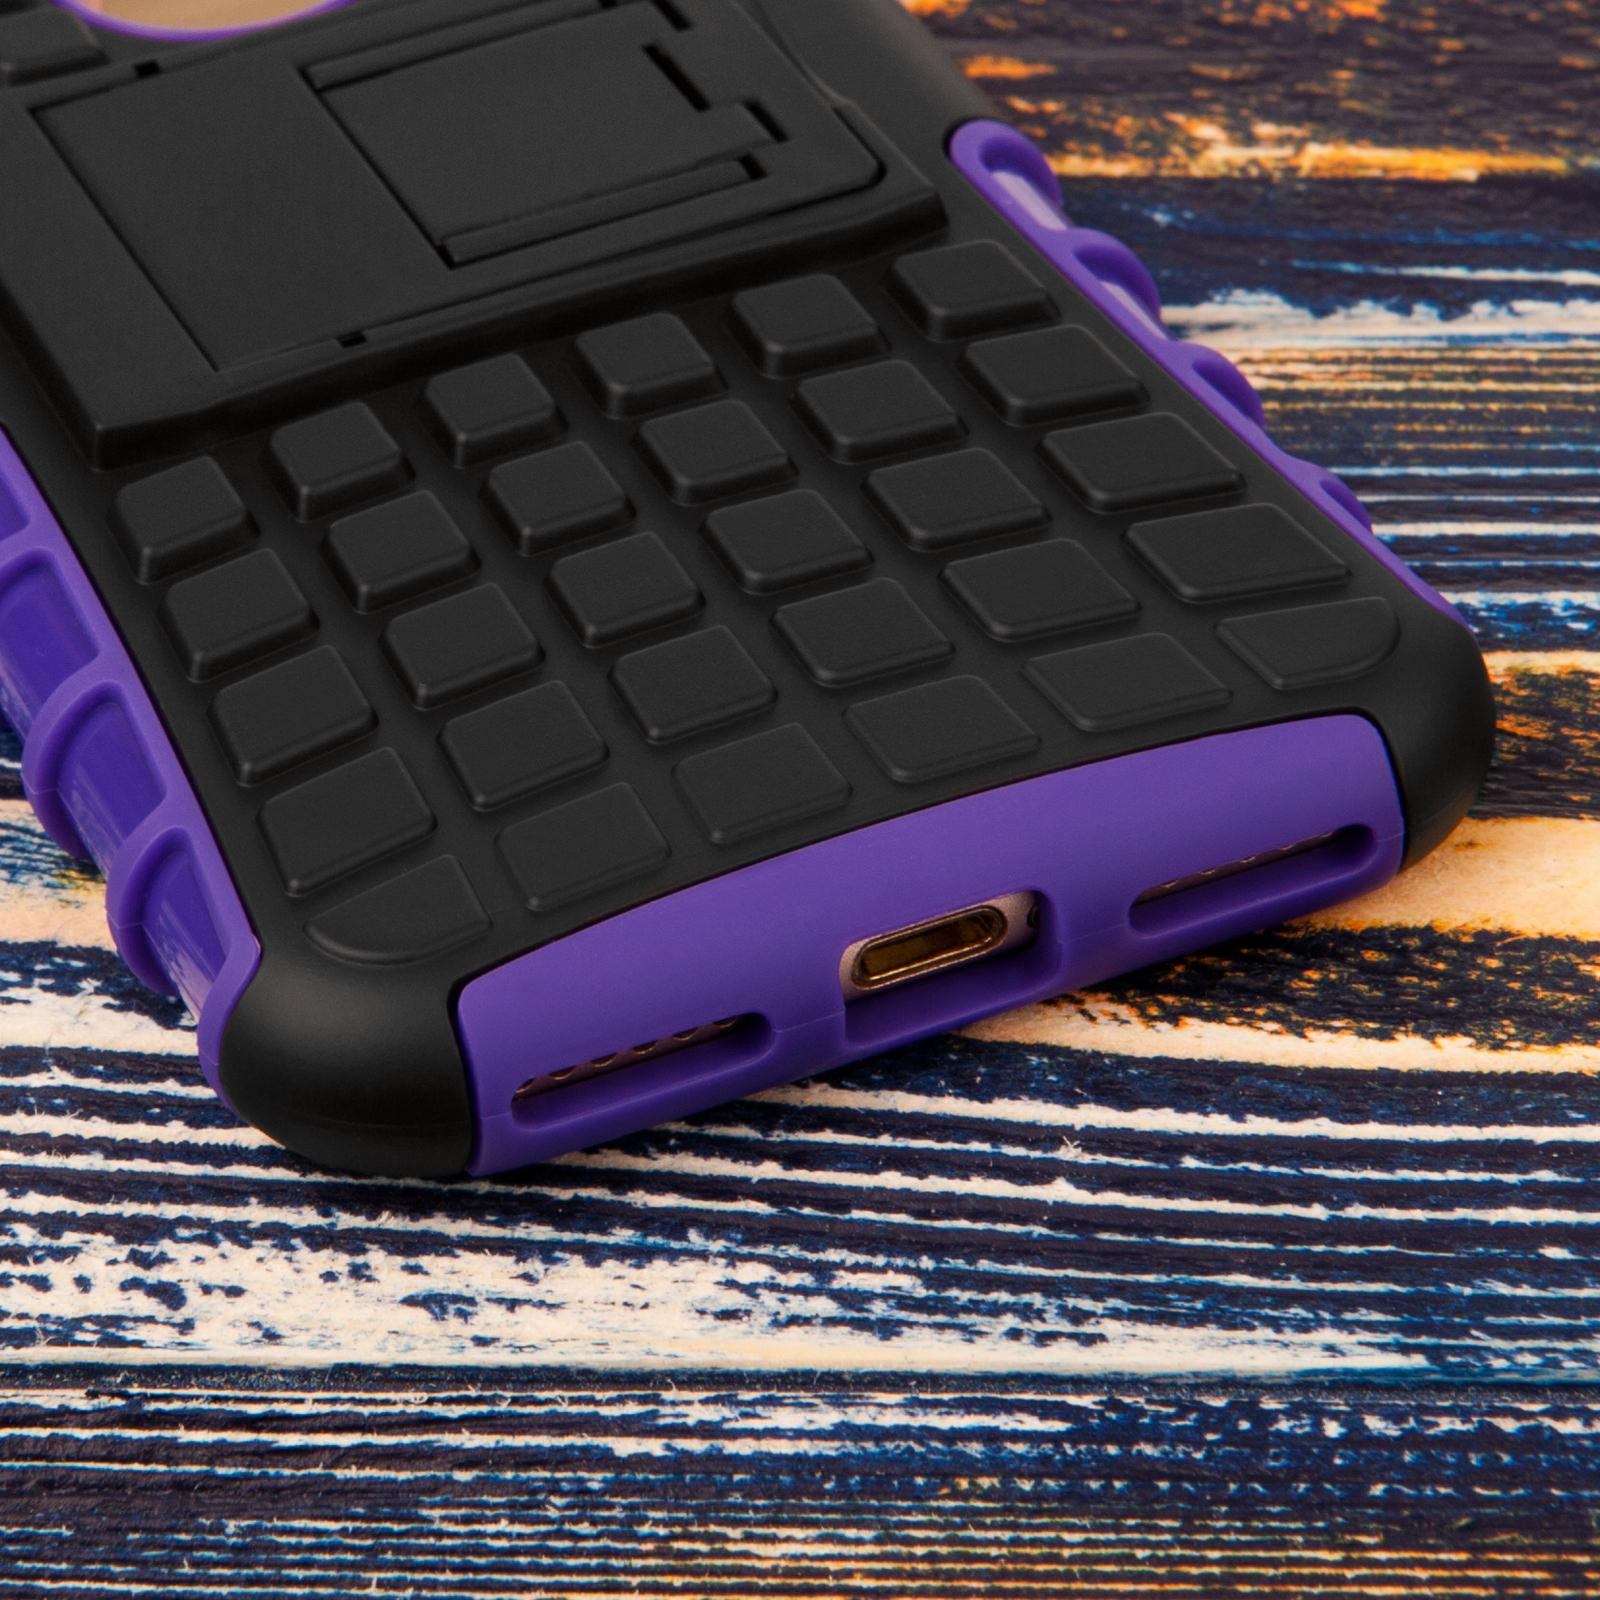 YouSave iPhone 7 Kickstand Combo Case - Purple